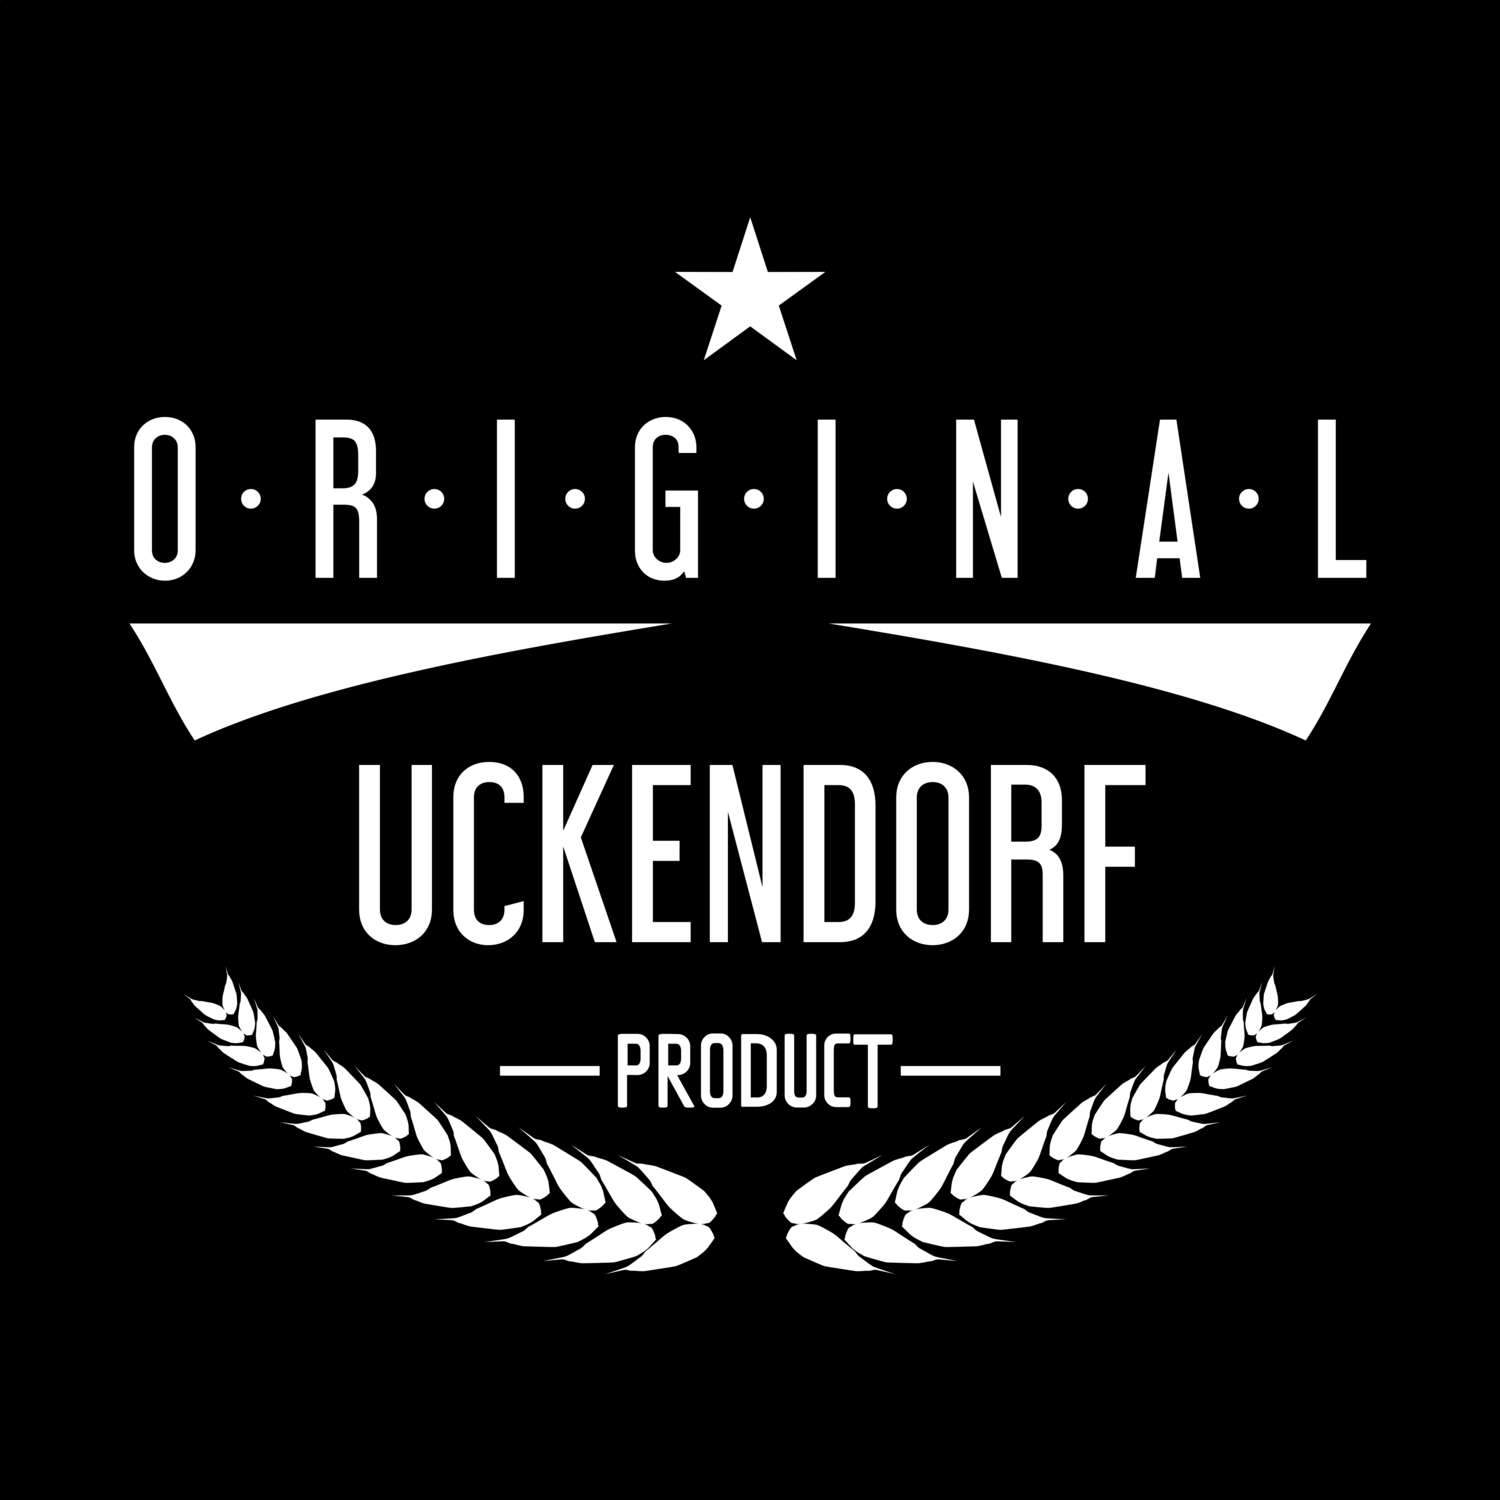 Uckendorf T-Shirt »Original Product«